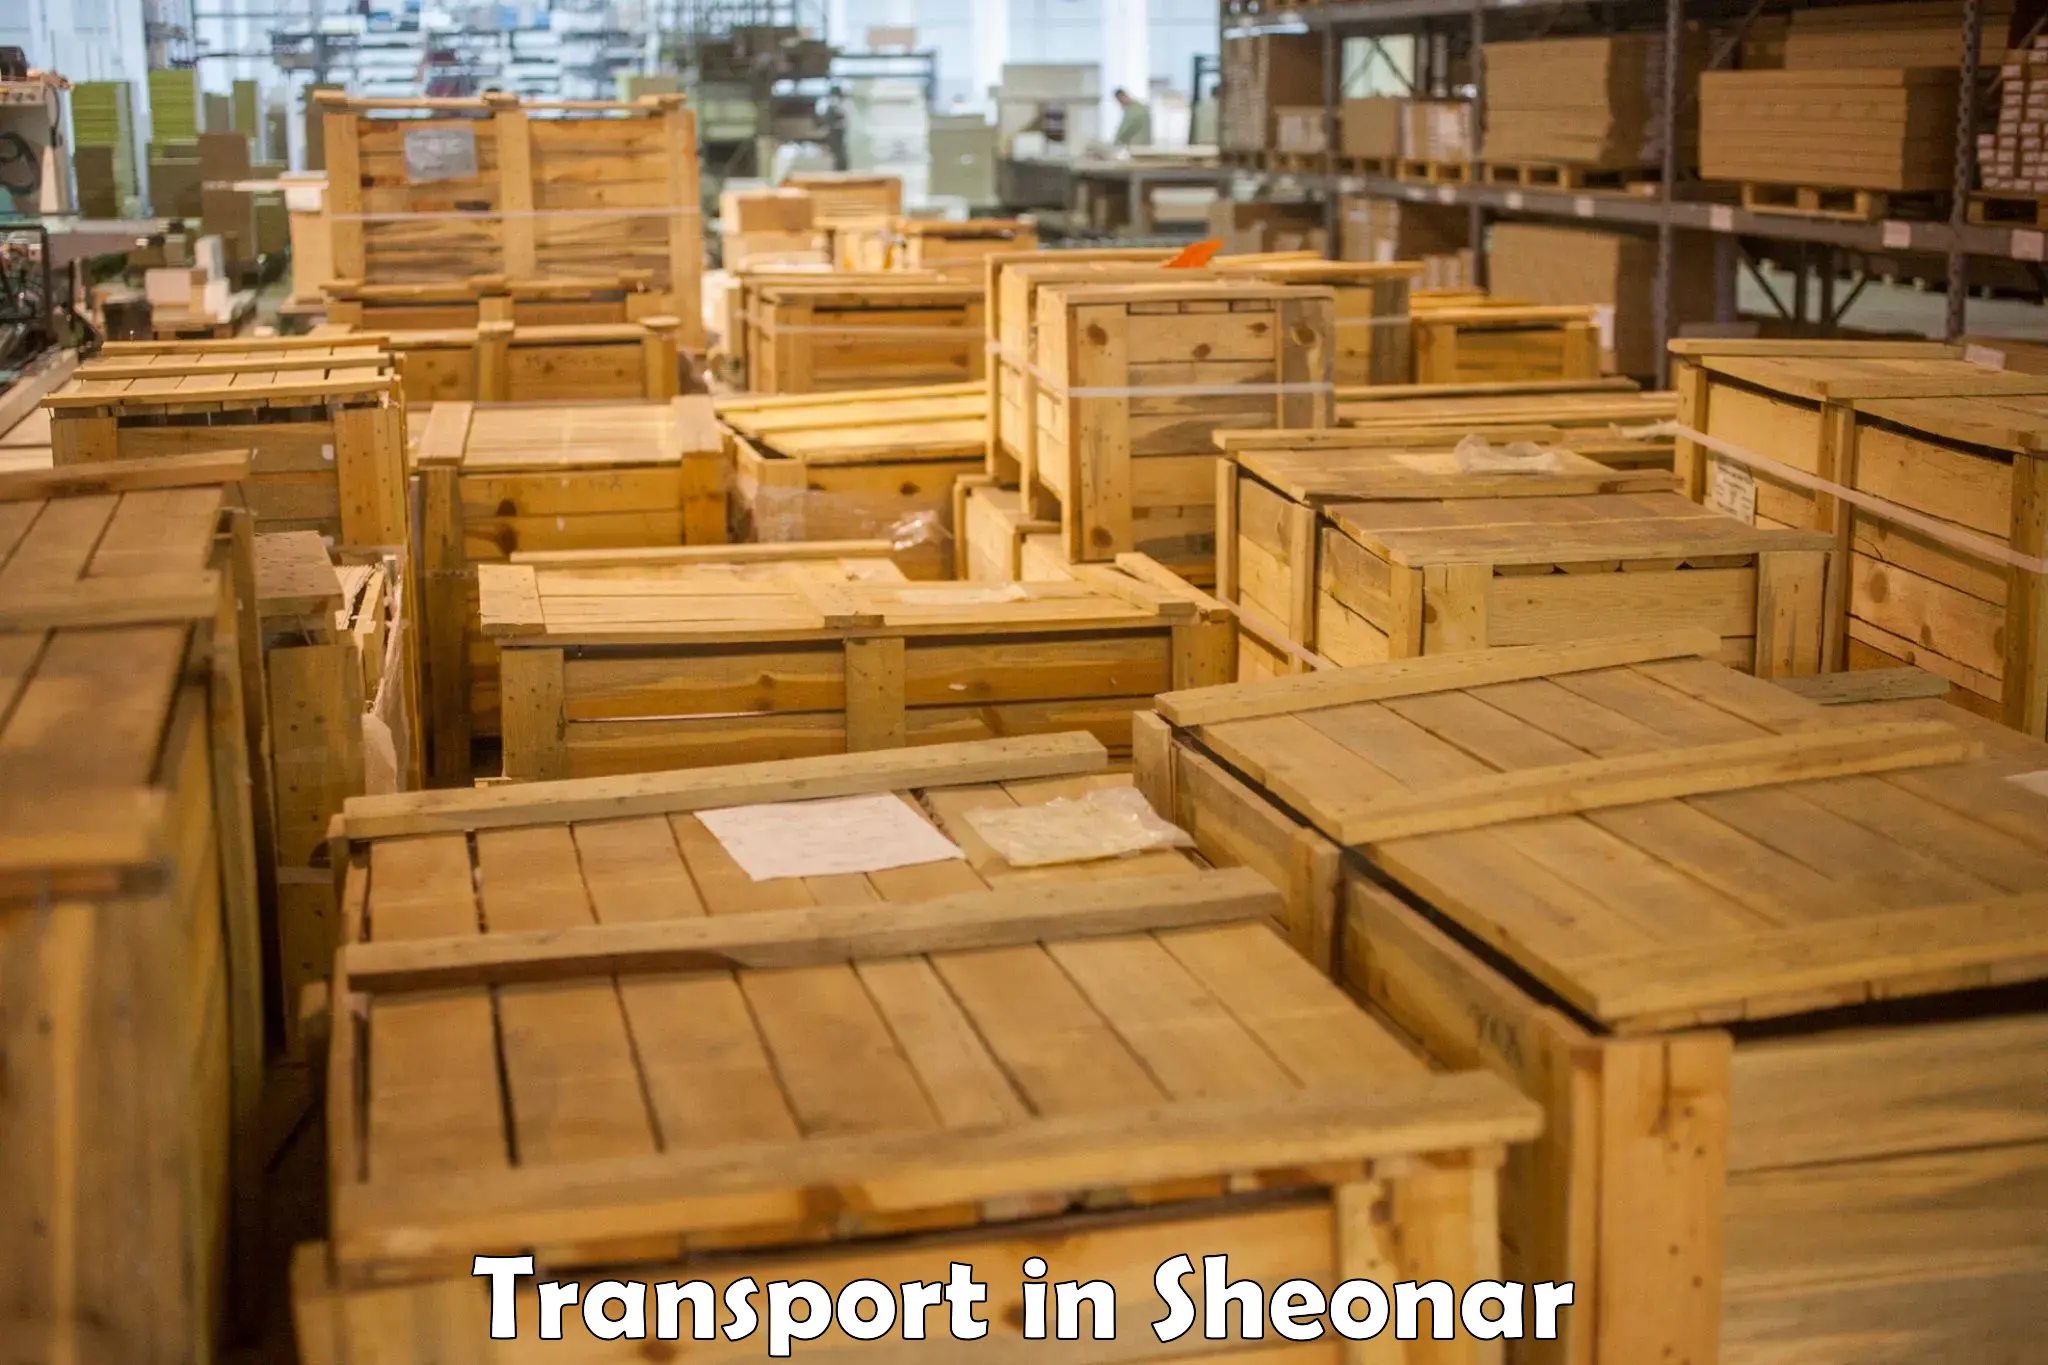 Interstate goods transport in Sheonar